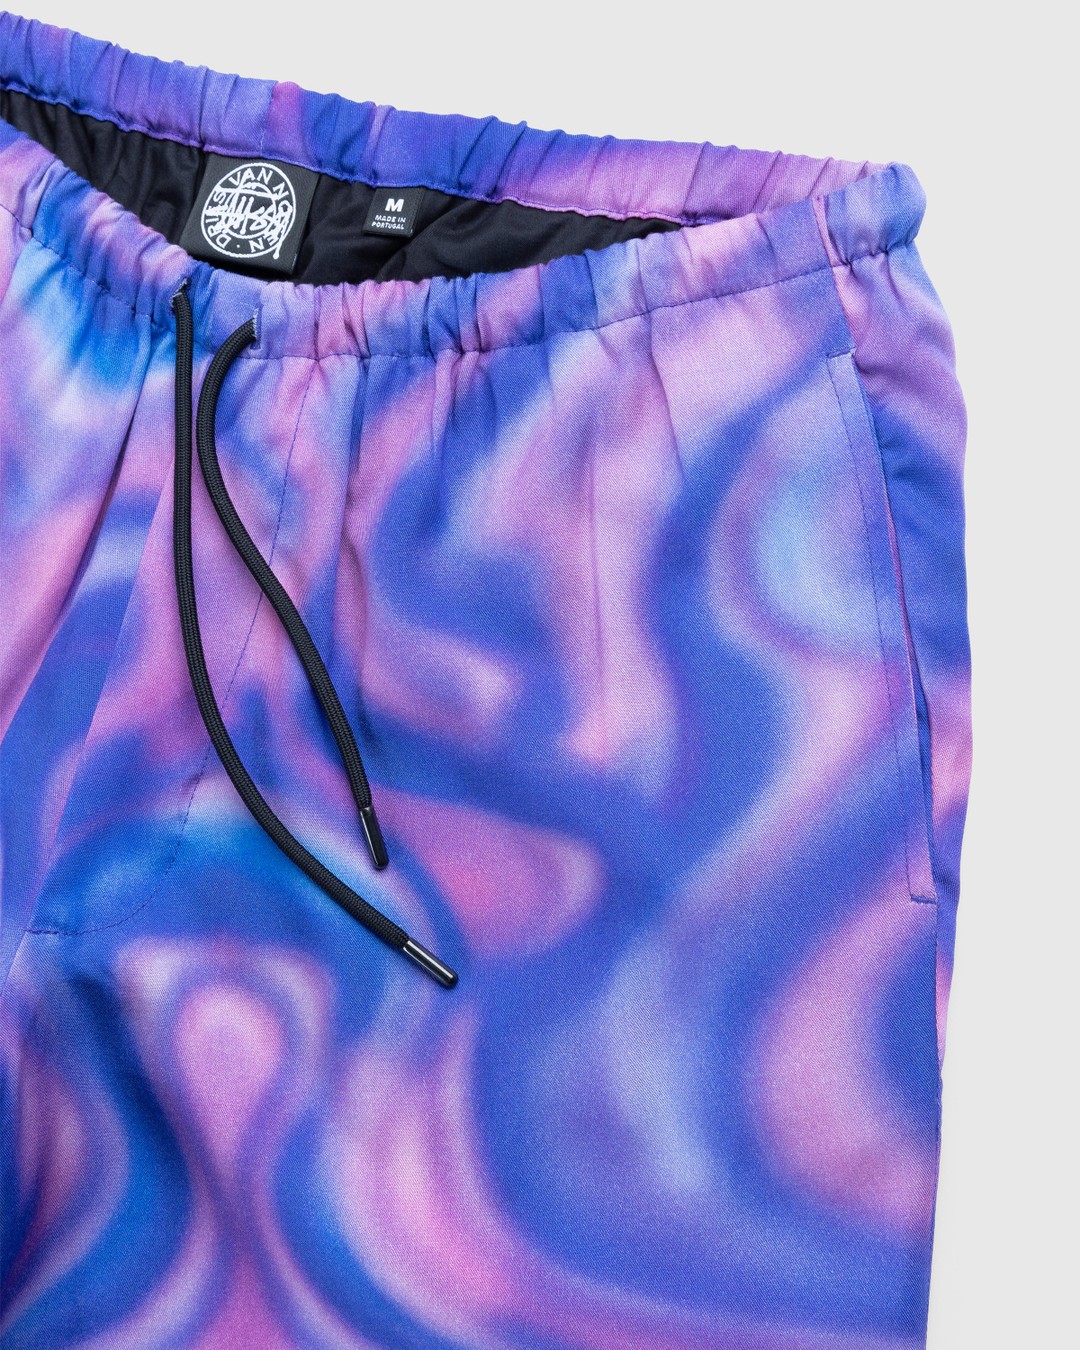 Stüssy x Dries van Noten – Airbrush Shrooms Shorts - Bermuda Cuts - Purple - Image 5